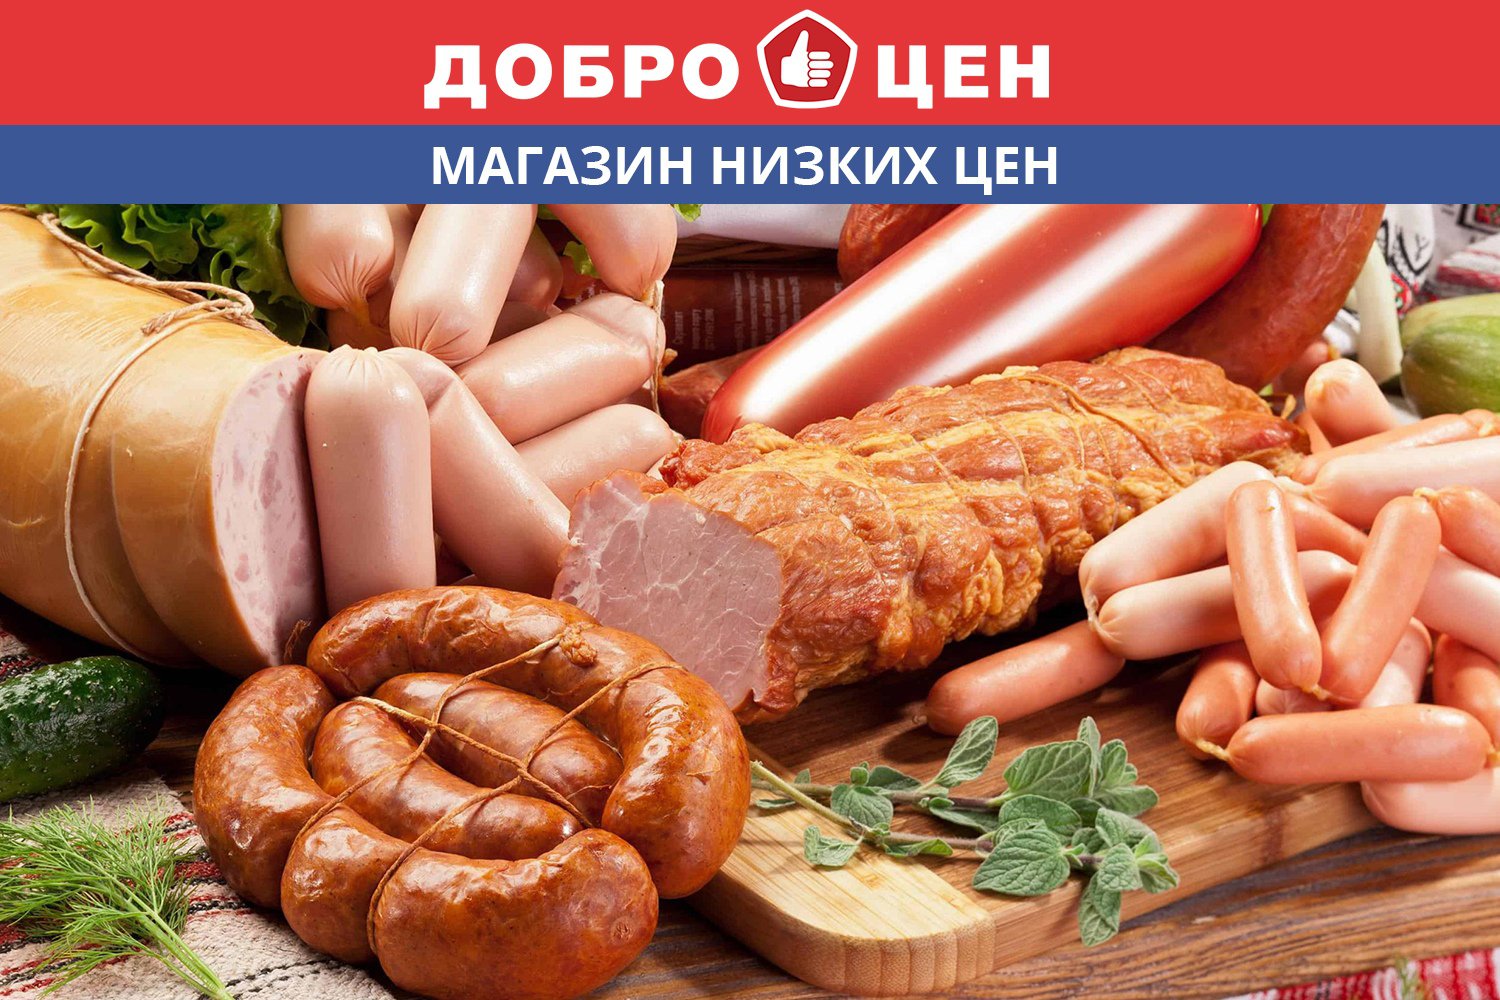 Магазин «Доброцен» объявил акцию на мясную продукцию